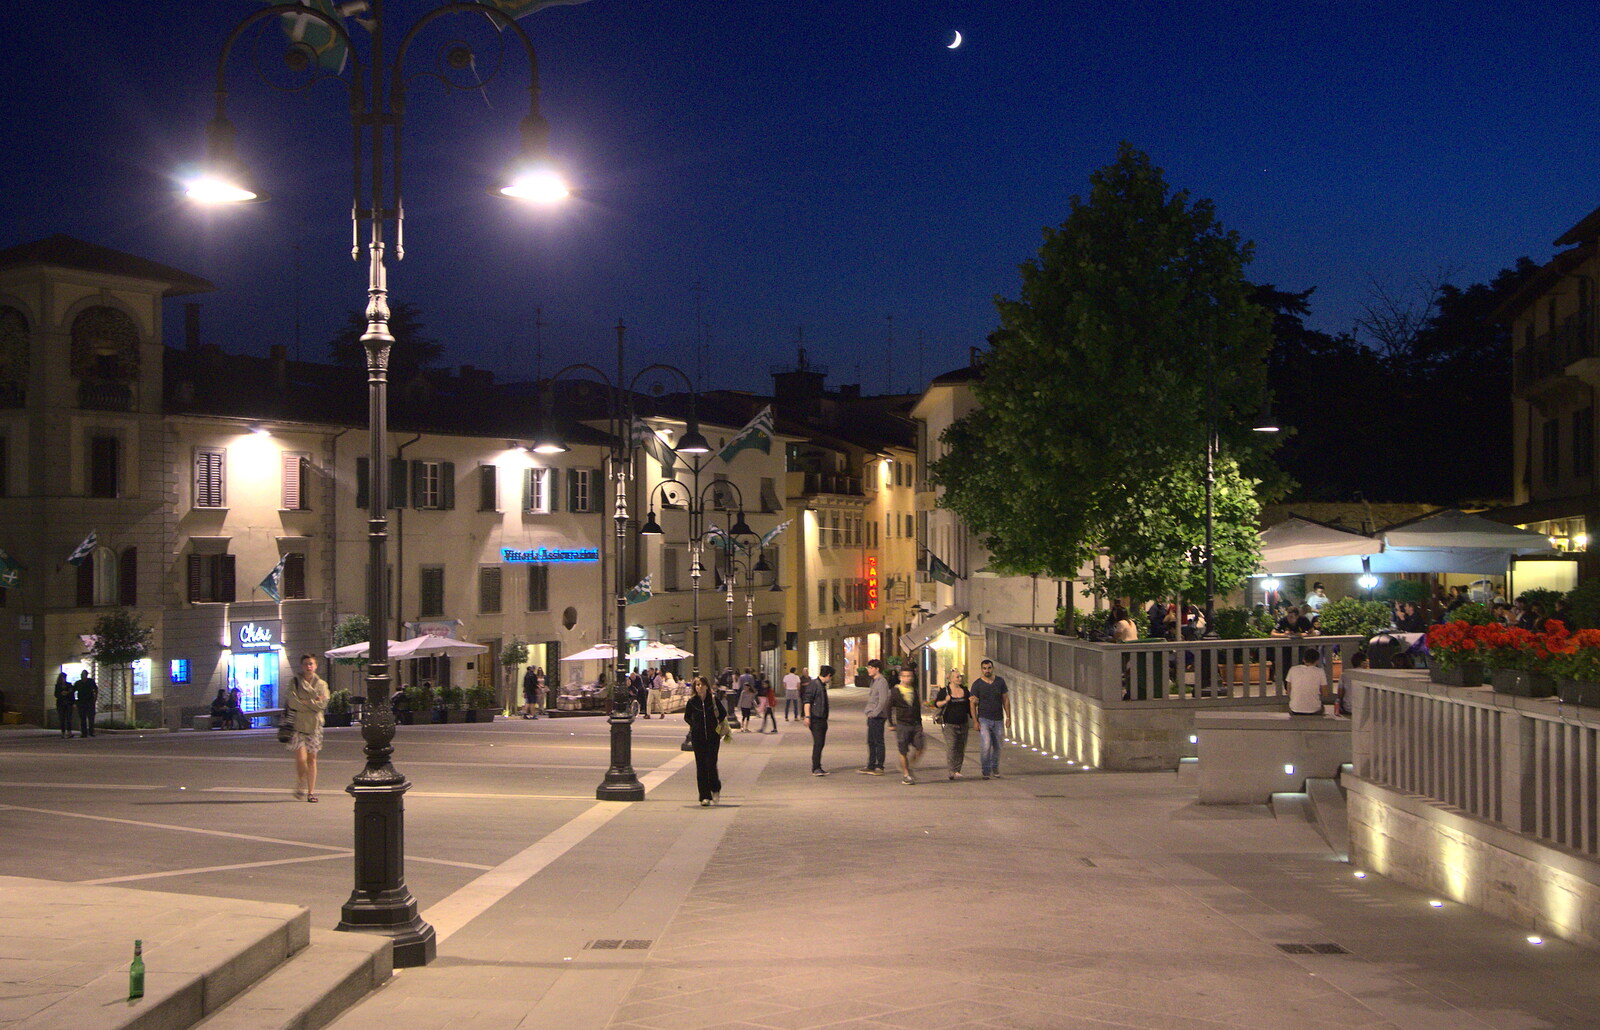 Night-time Arezzo street scene from Italian Weddings, Saracens and Swimming Pools, Arezzo, Tuscany - 12th June 2013